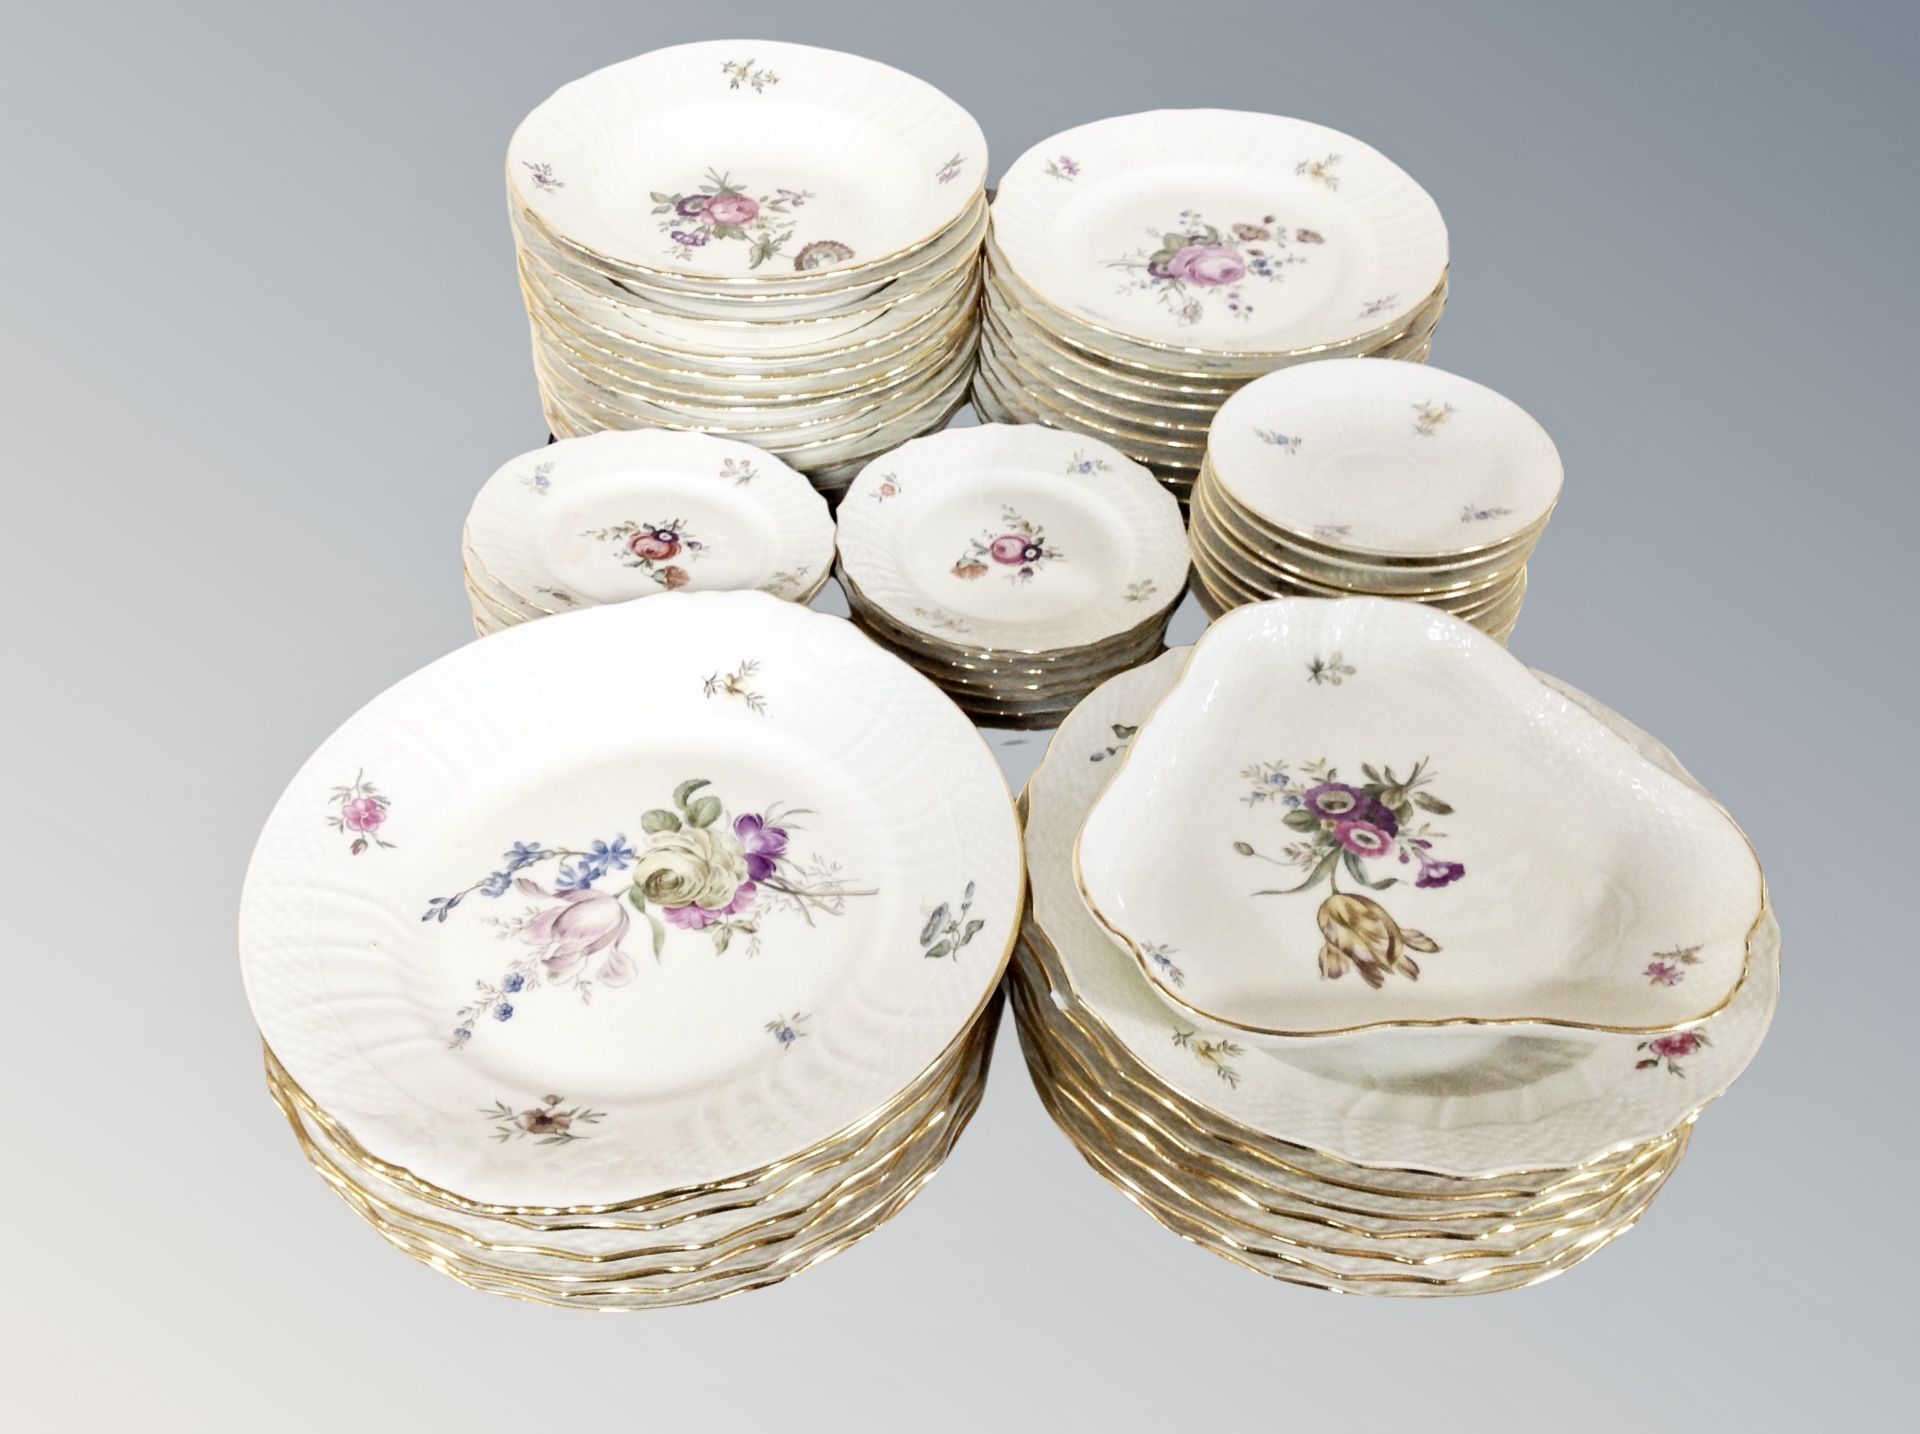 Approximately seventy one pieces of Royal Copenhagen dinner porcelain